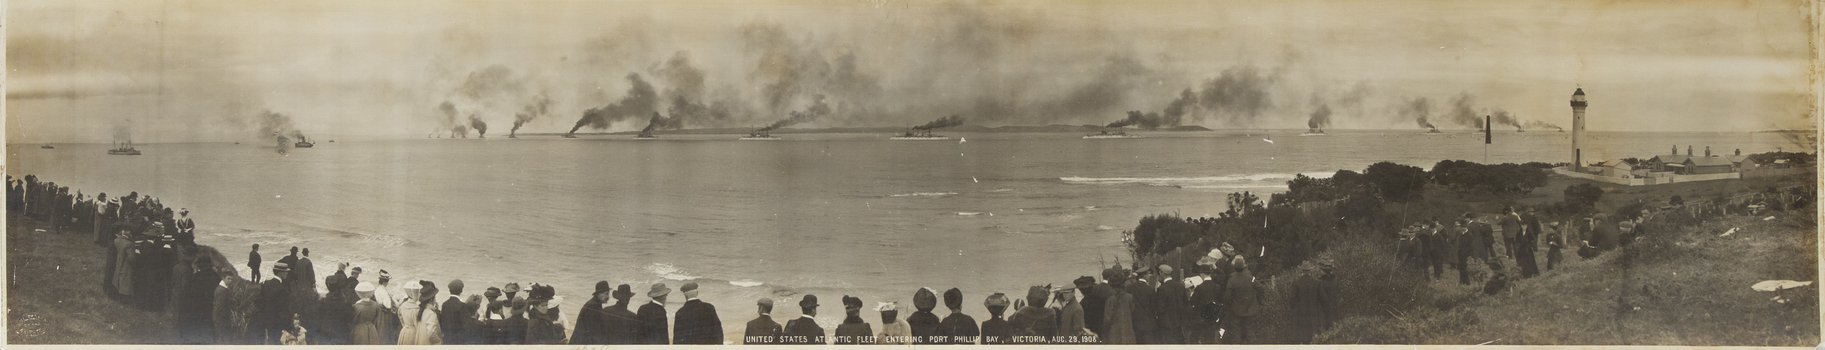 An original unframed monochrome photograph of the United States Atlantic Fleet entering Port Phillip Bay in 1908.